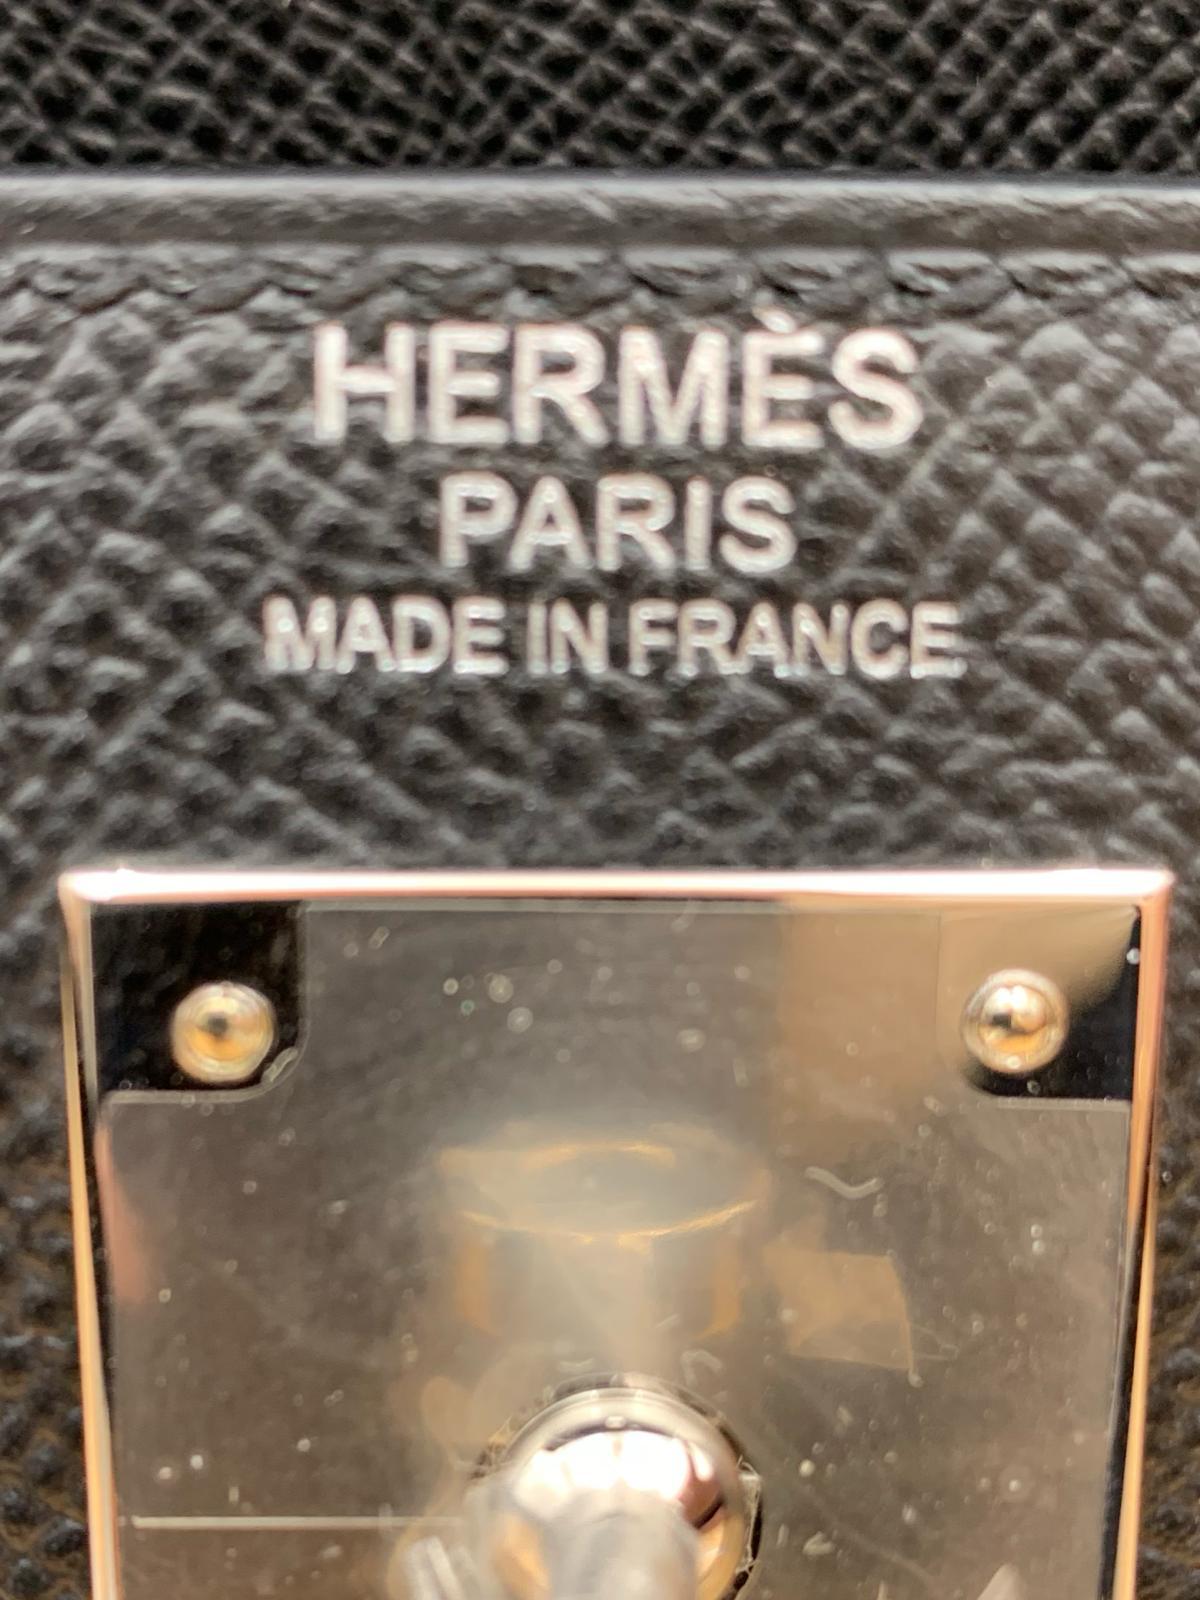 Hermes Kelly bag 32 Sellier Black Epsom leather Silver hardware